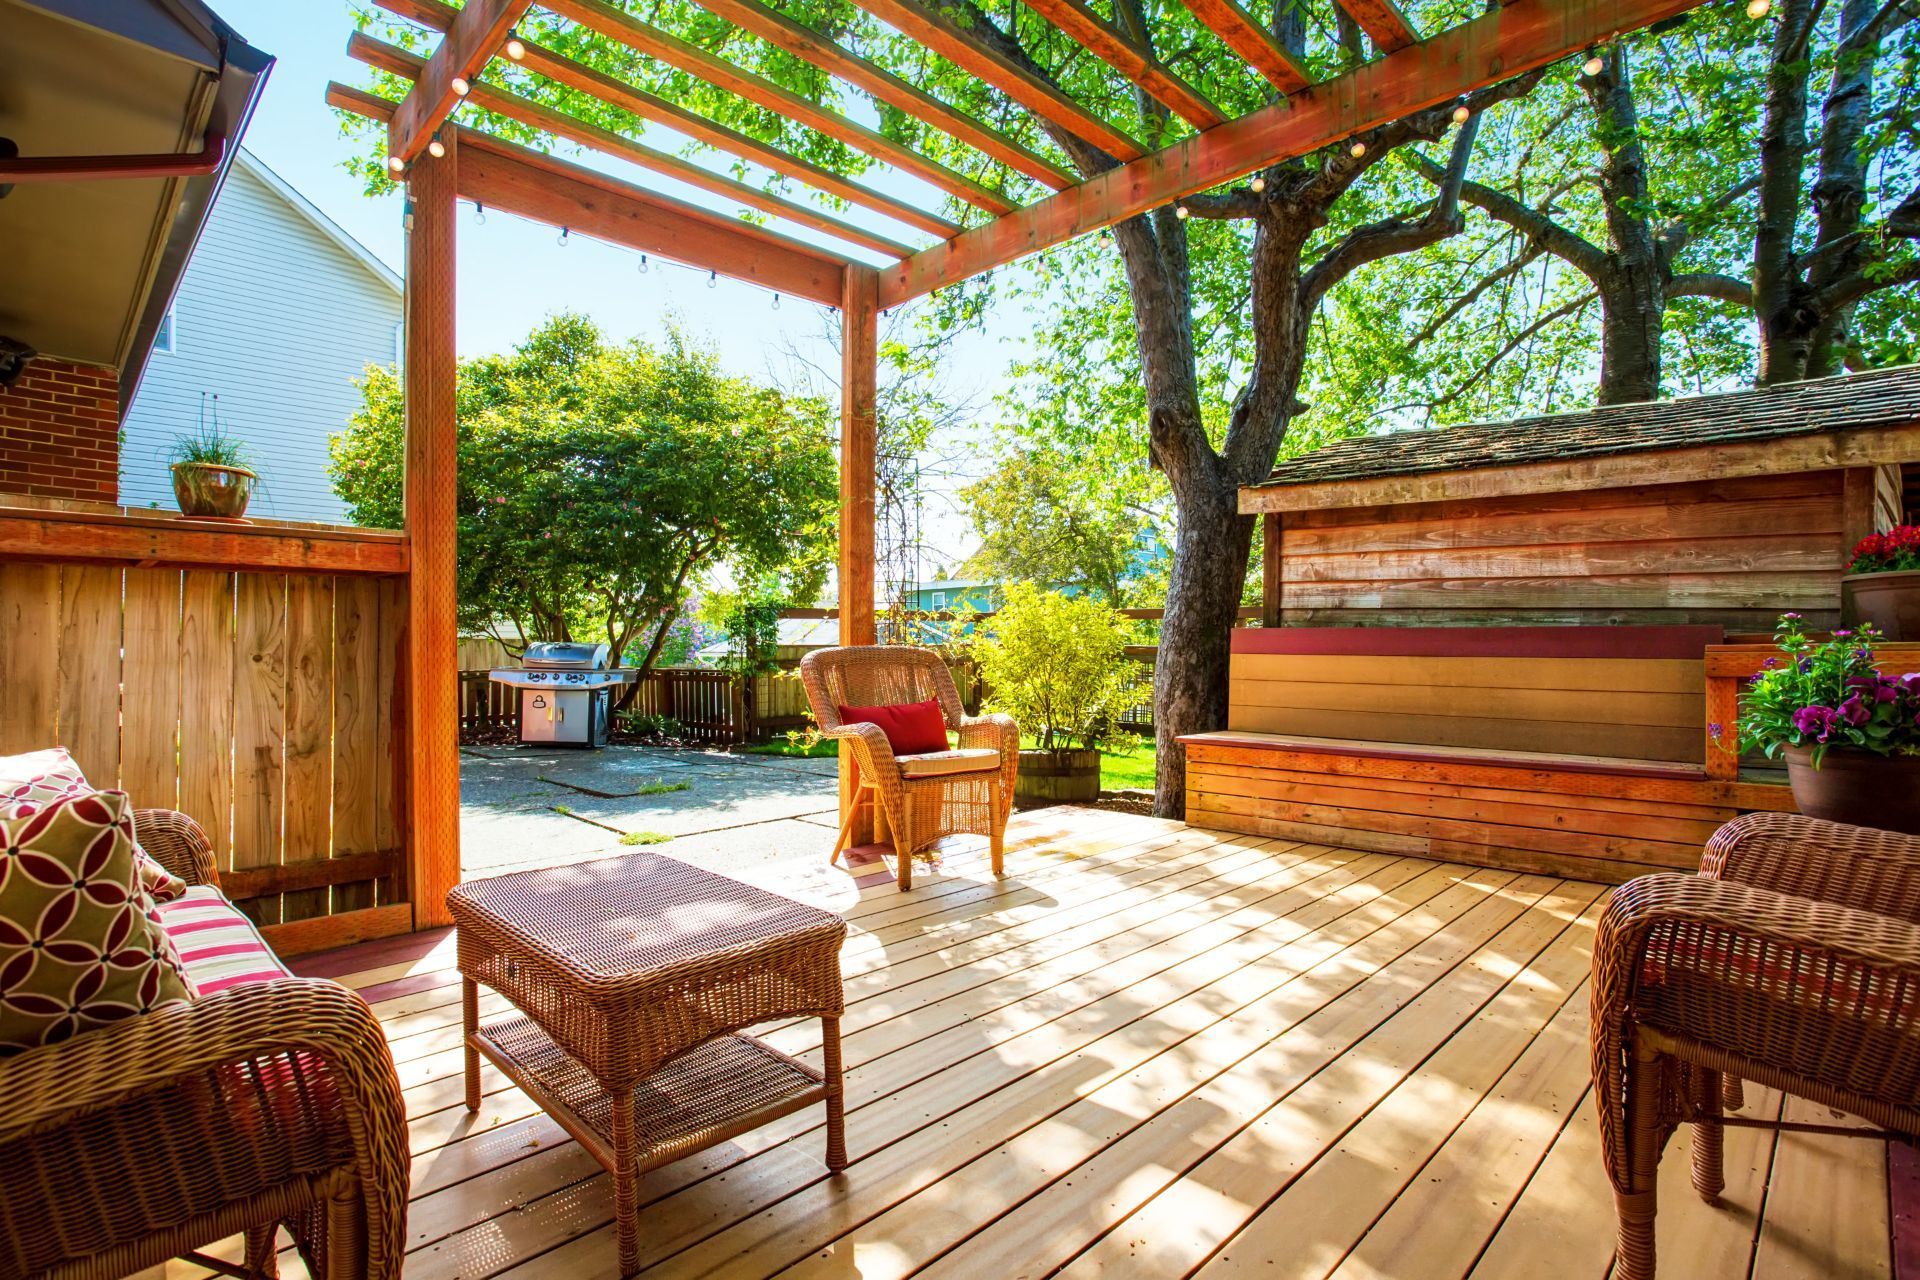 Sunny backyard deck with pergola, furniture, hot tub, and greenery.